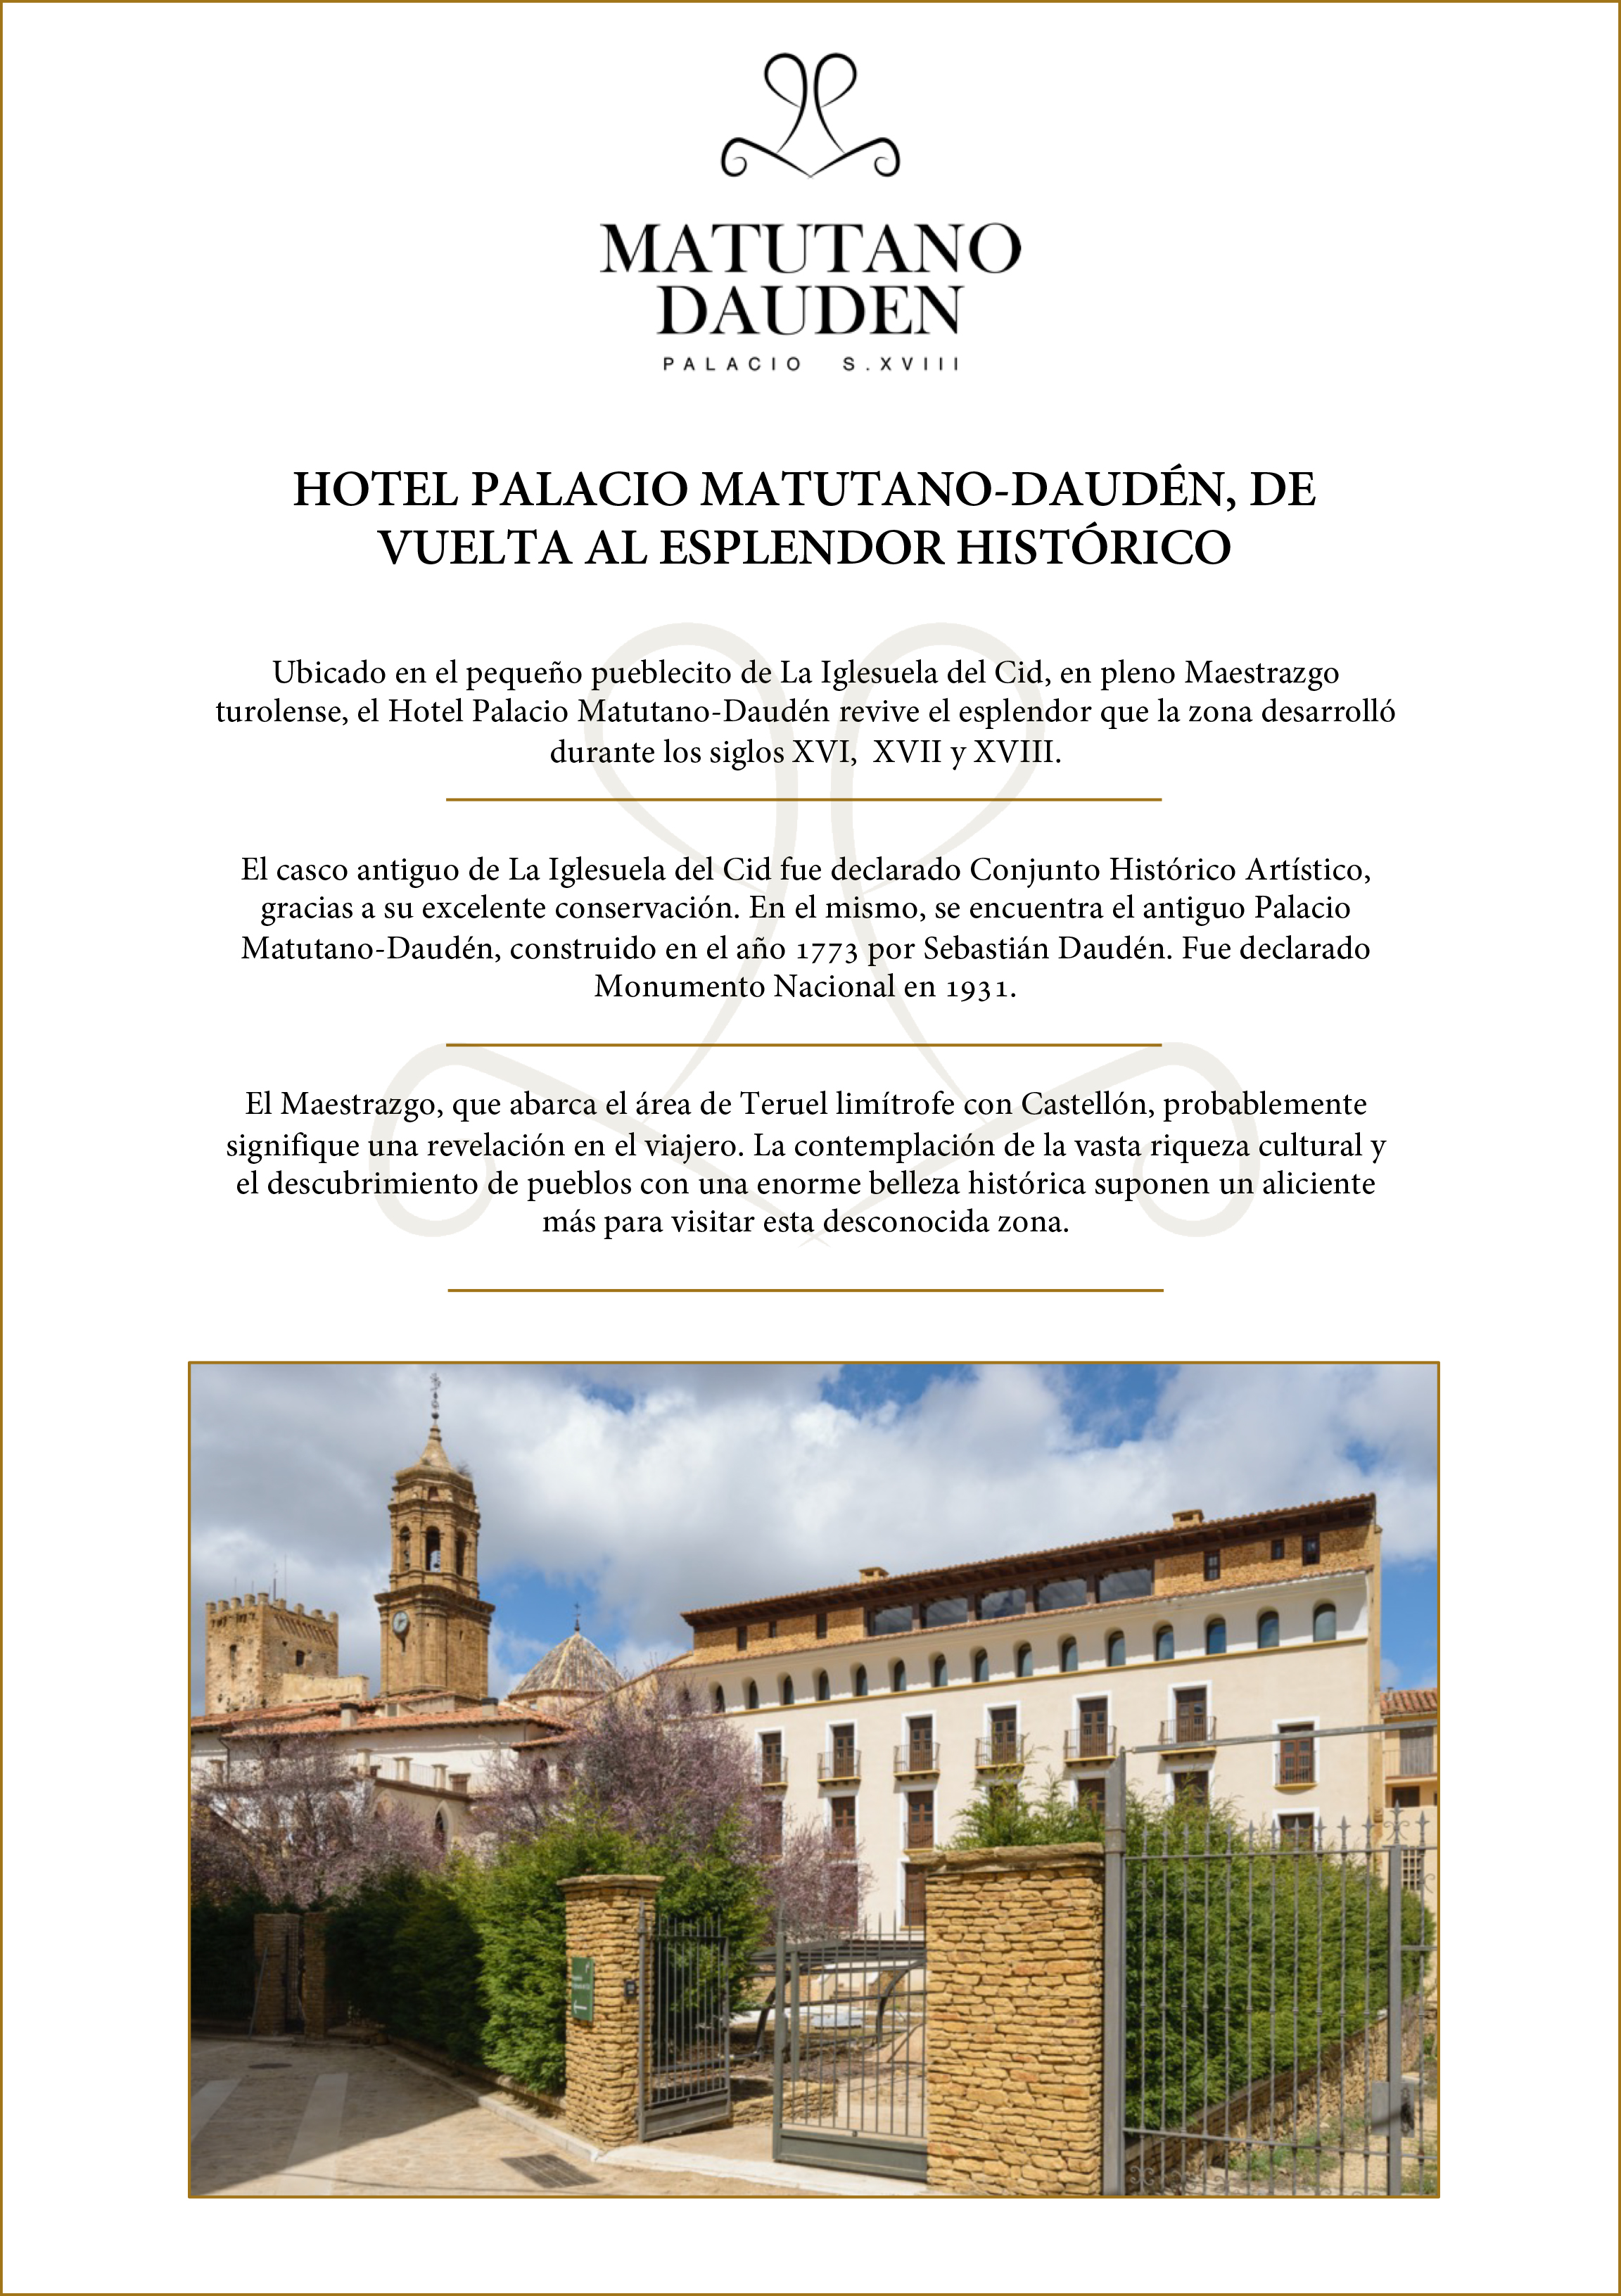 NdP Hotel Palacio Matutano